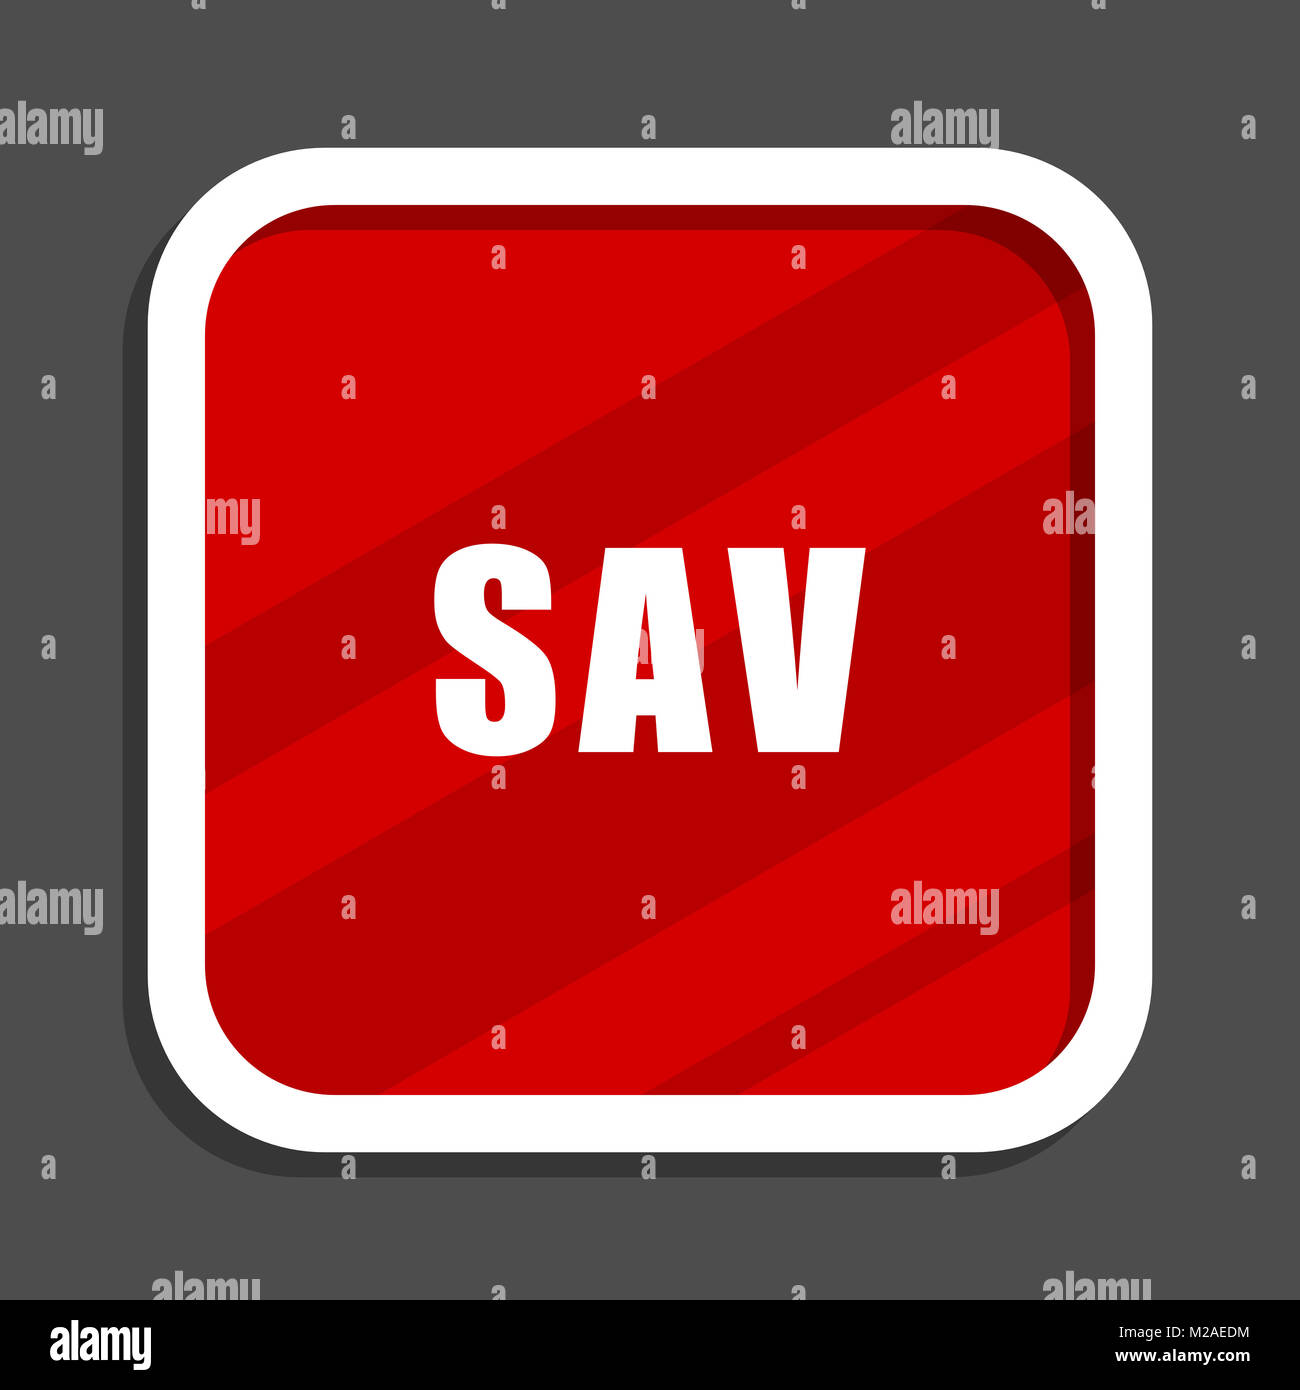 Sav icon. Flat design square internet banner. Stock Photo